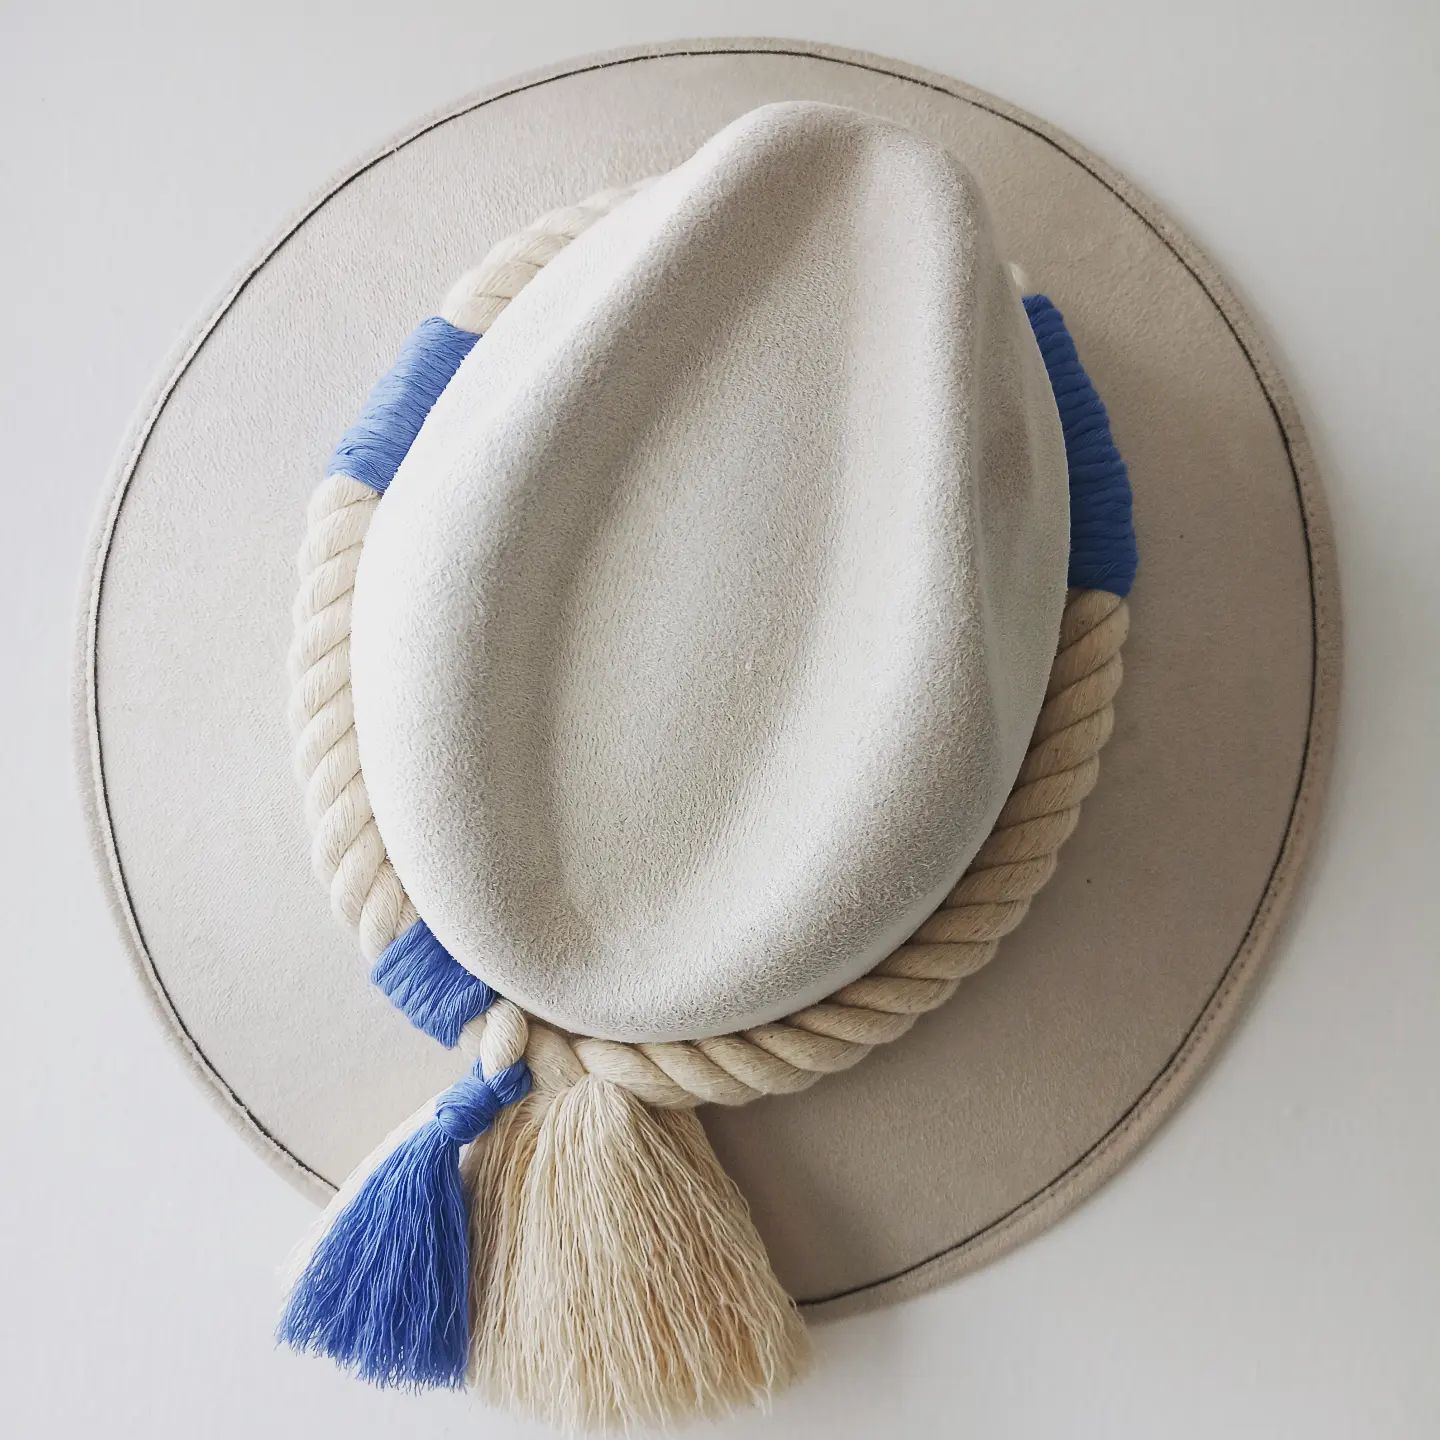 Sombrero de gamuza color ostión cordón de algodón color crudo con aplicación azul.